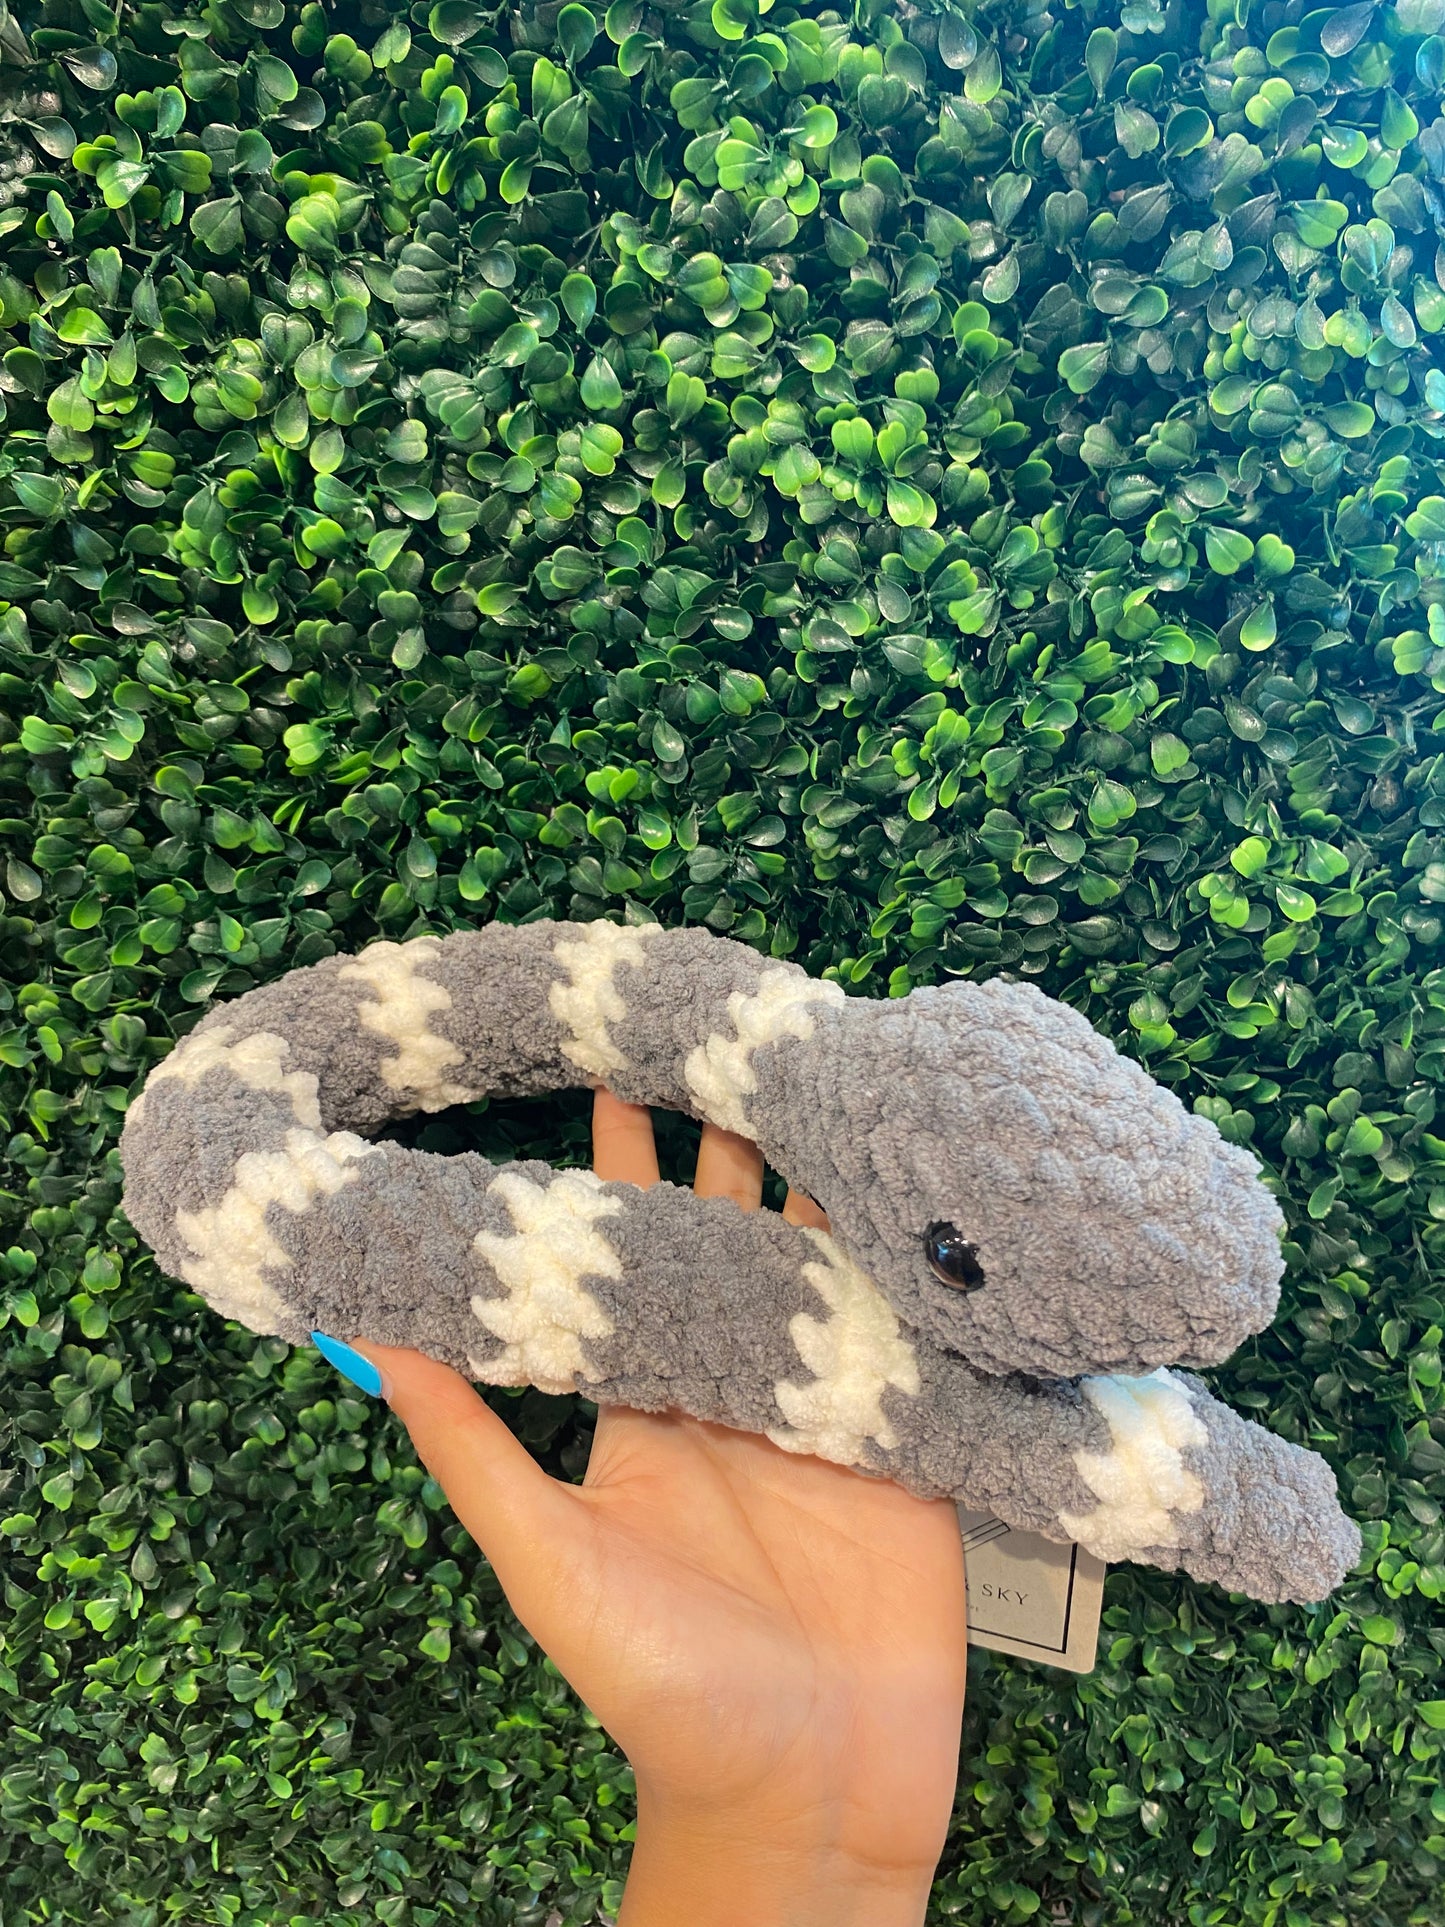 Gray Crochet Stuffed Animals - Brain Cancer Fundraiser